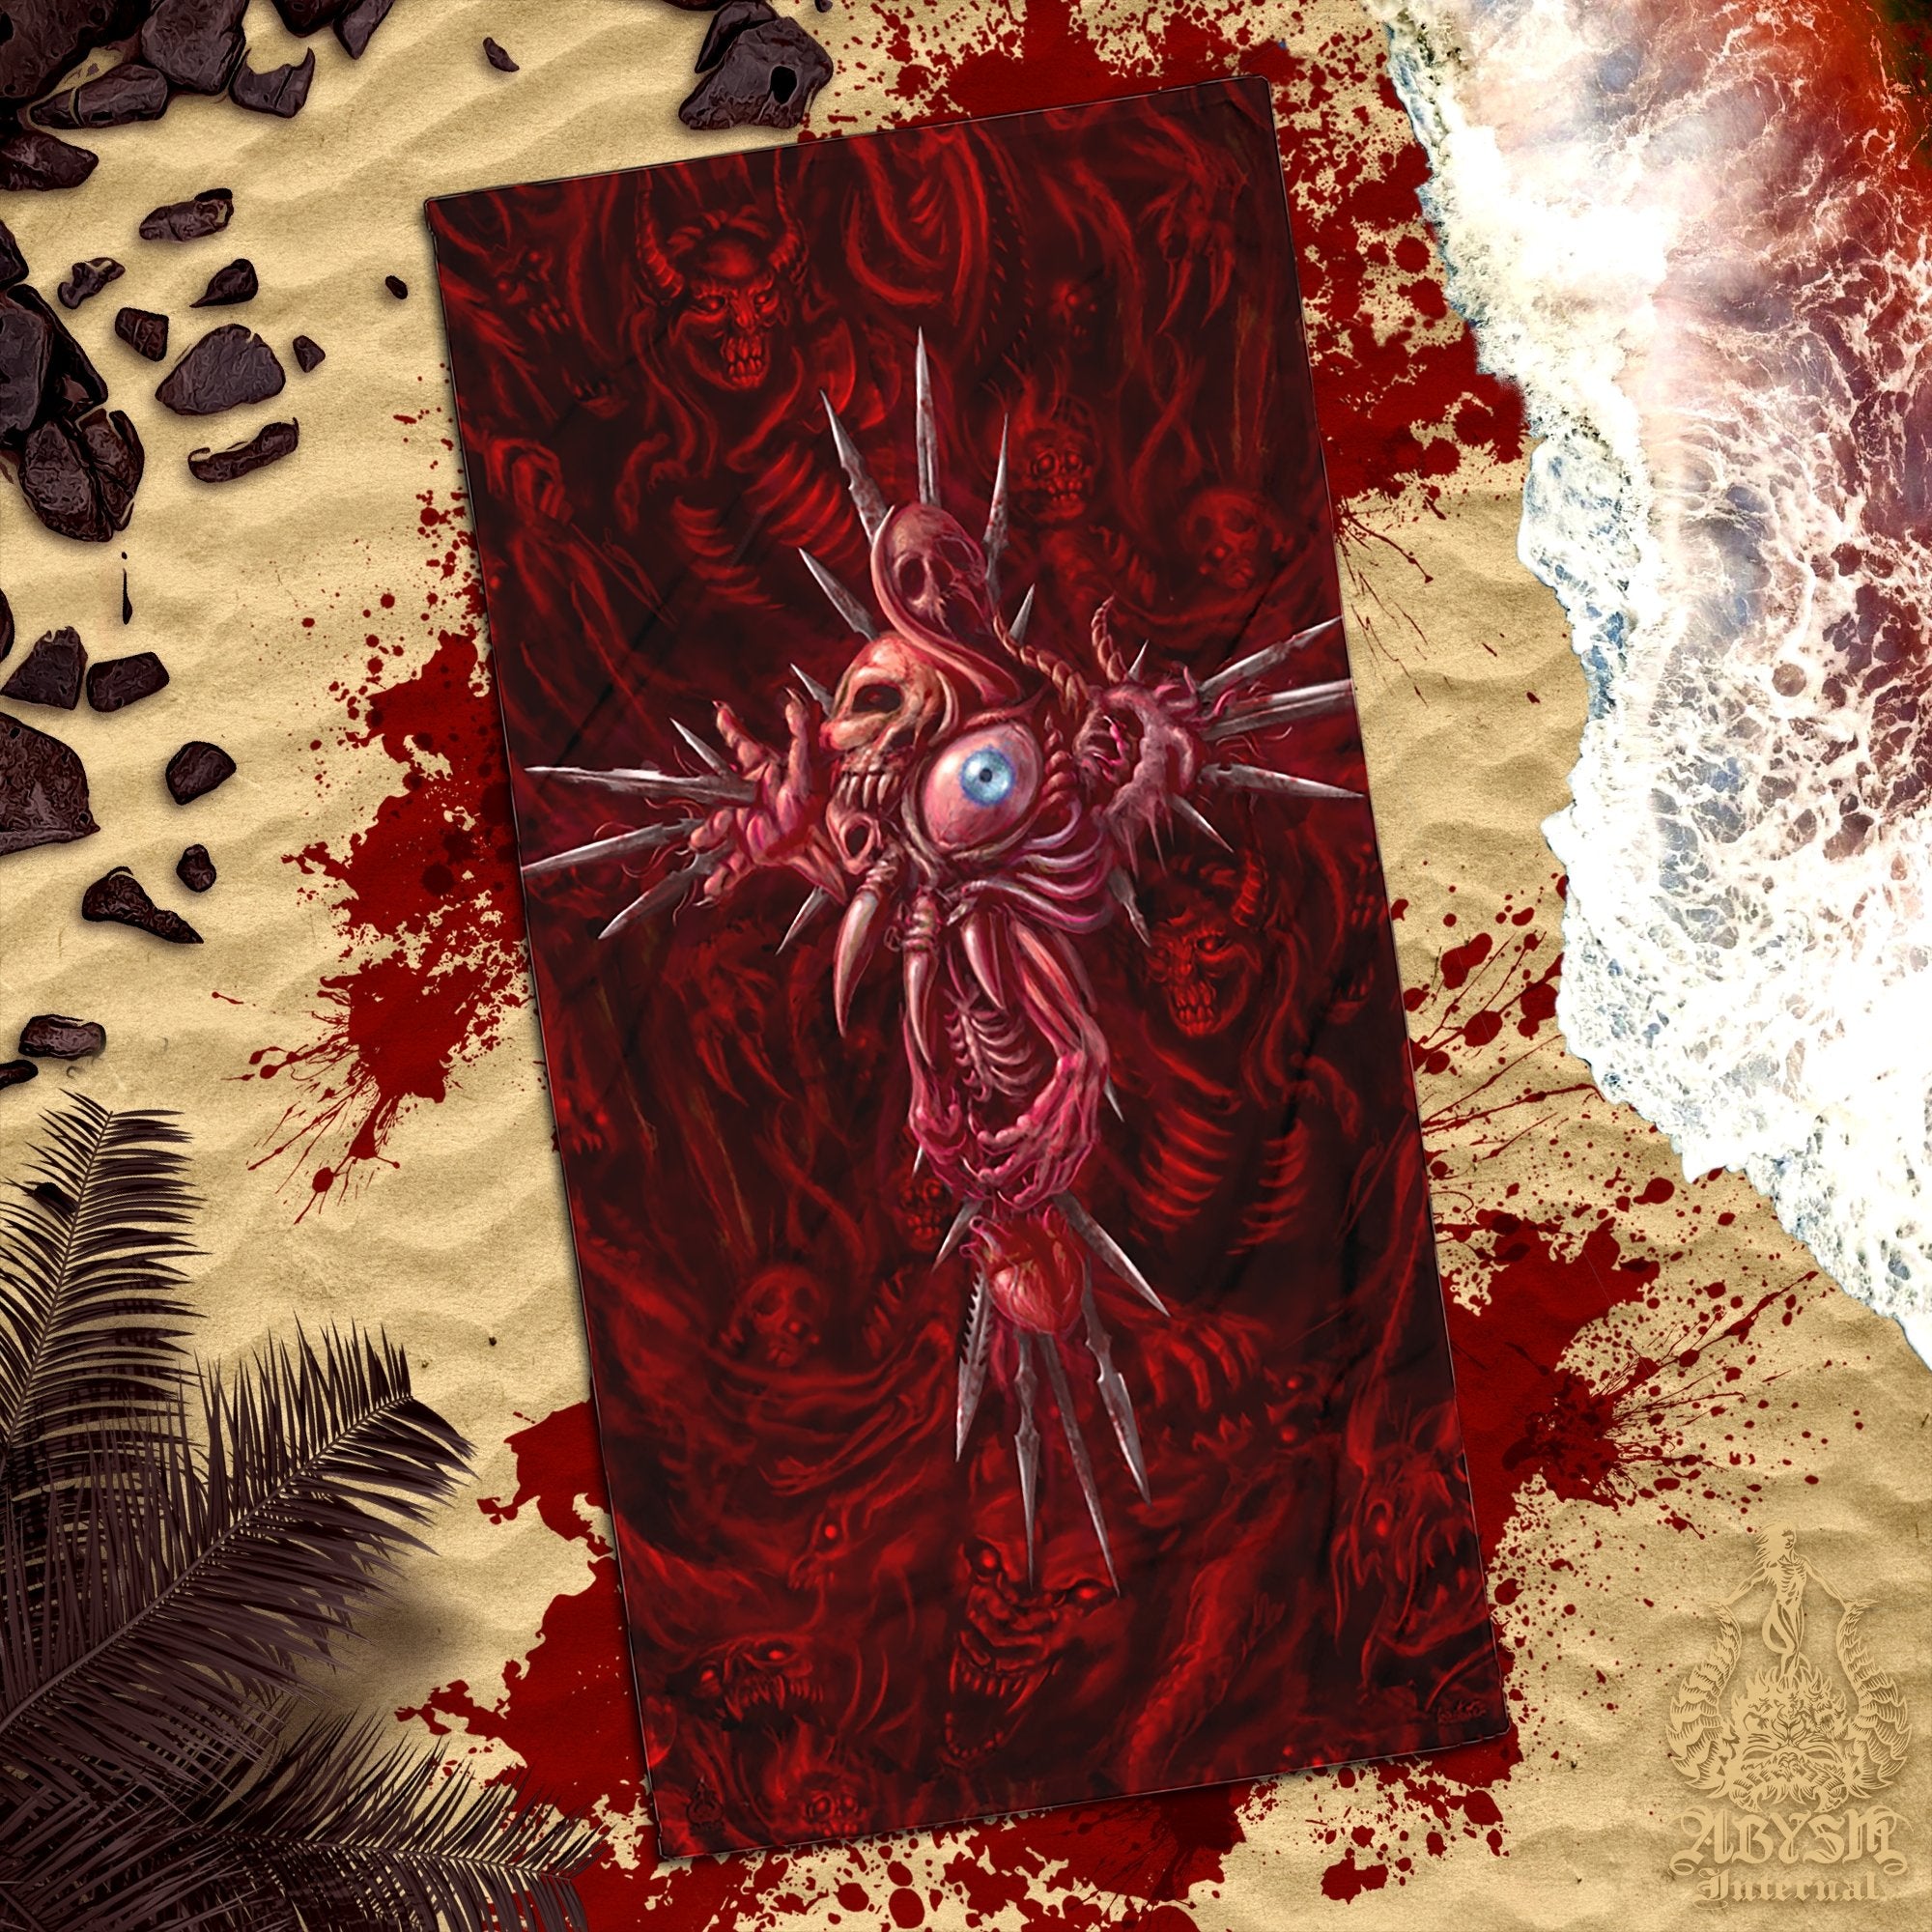 Horror Beach Towel, Gore & Blood Cross, Cool Gift Idea for Gamer Halloween - Red Demons - Abysm Internal